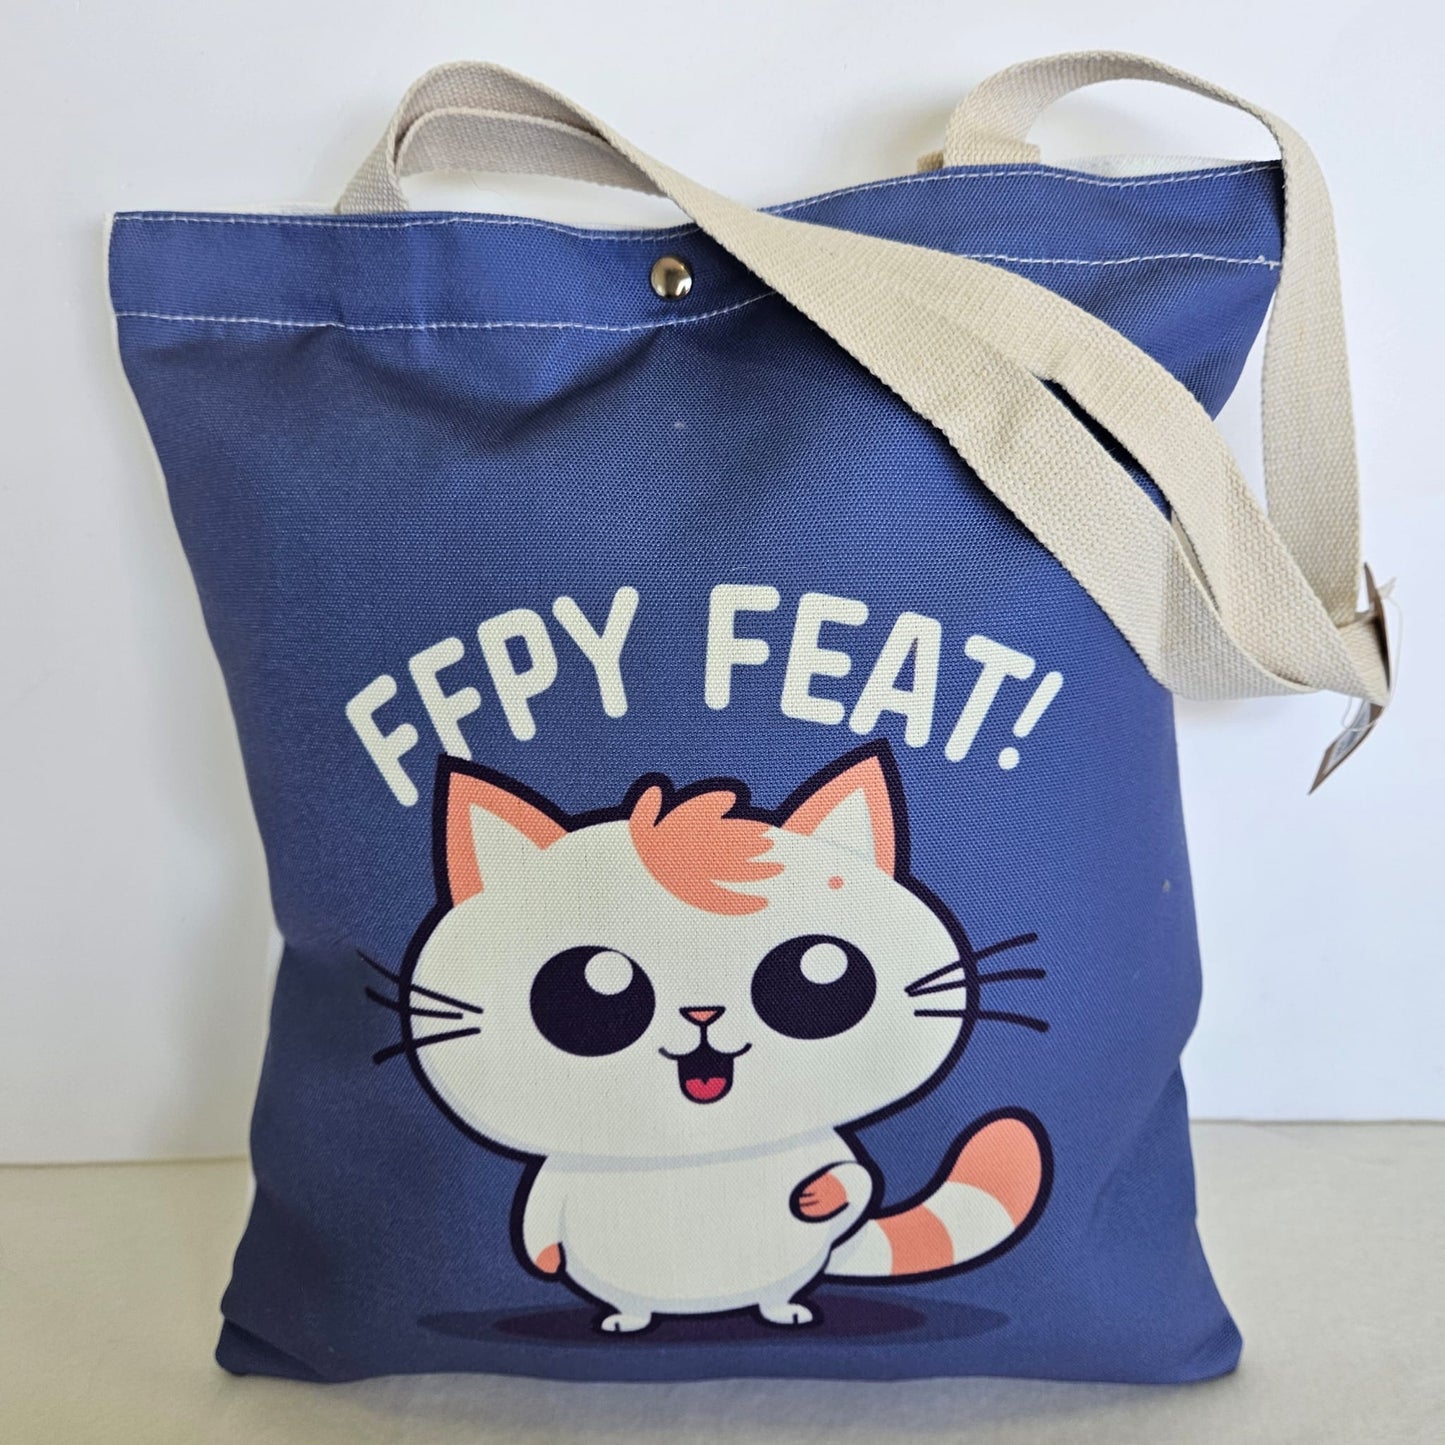 Bolsa tote bag de tela estampado gatito con frase "FFPY FEAT!"